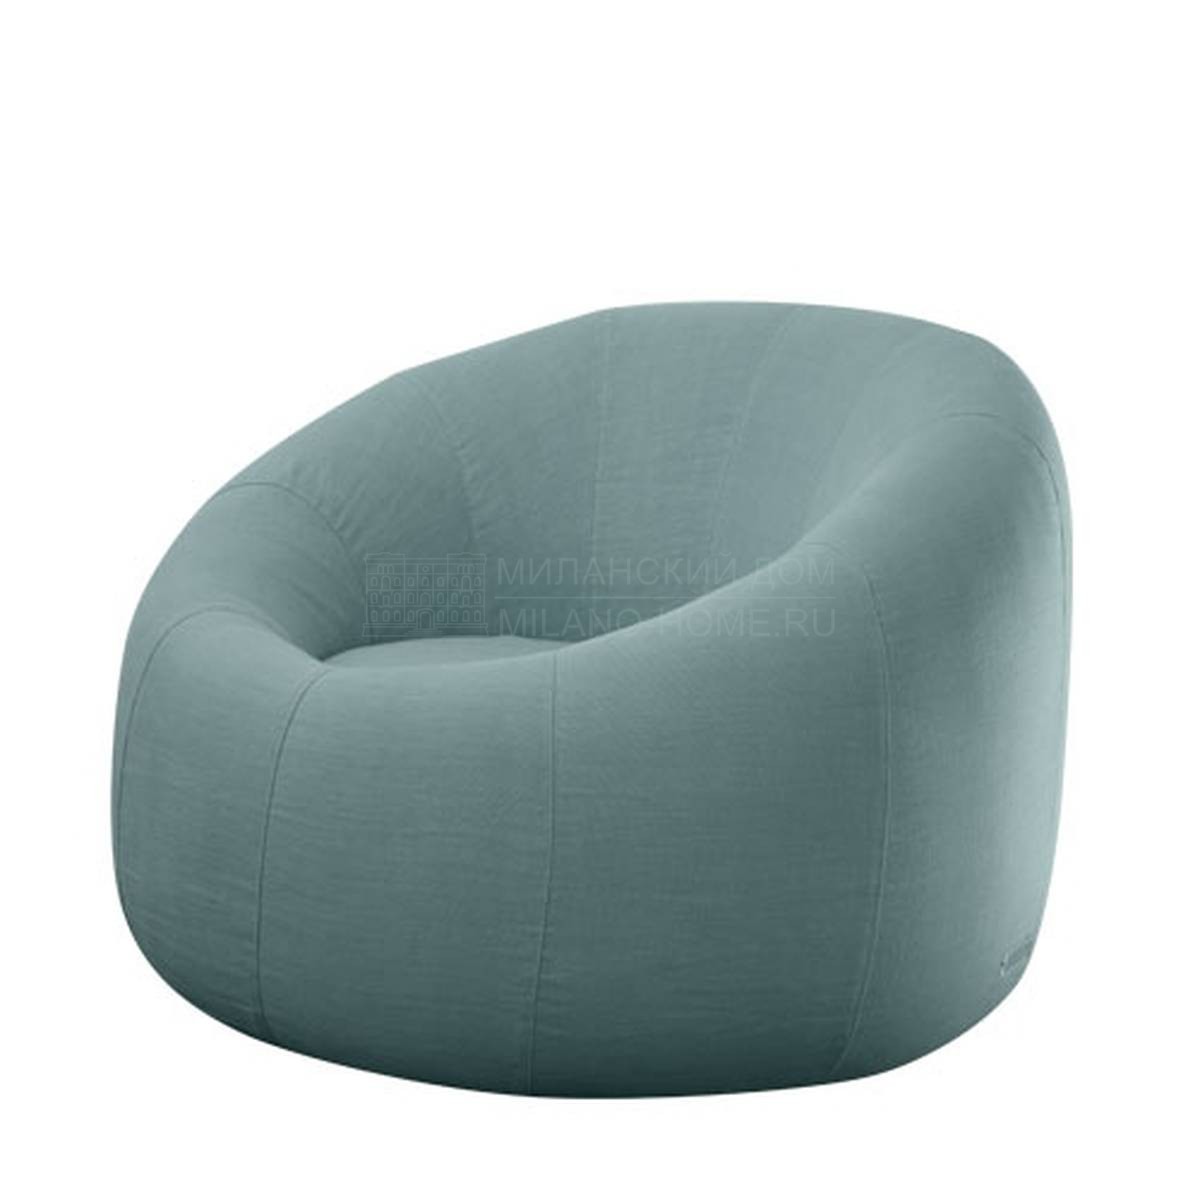 Круглое кресло Ball/ armchair из Италии фабрики SOFTHOUSE